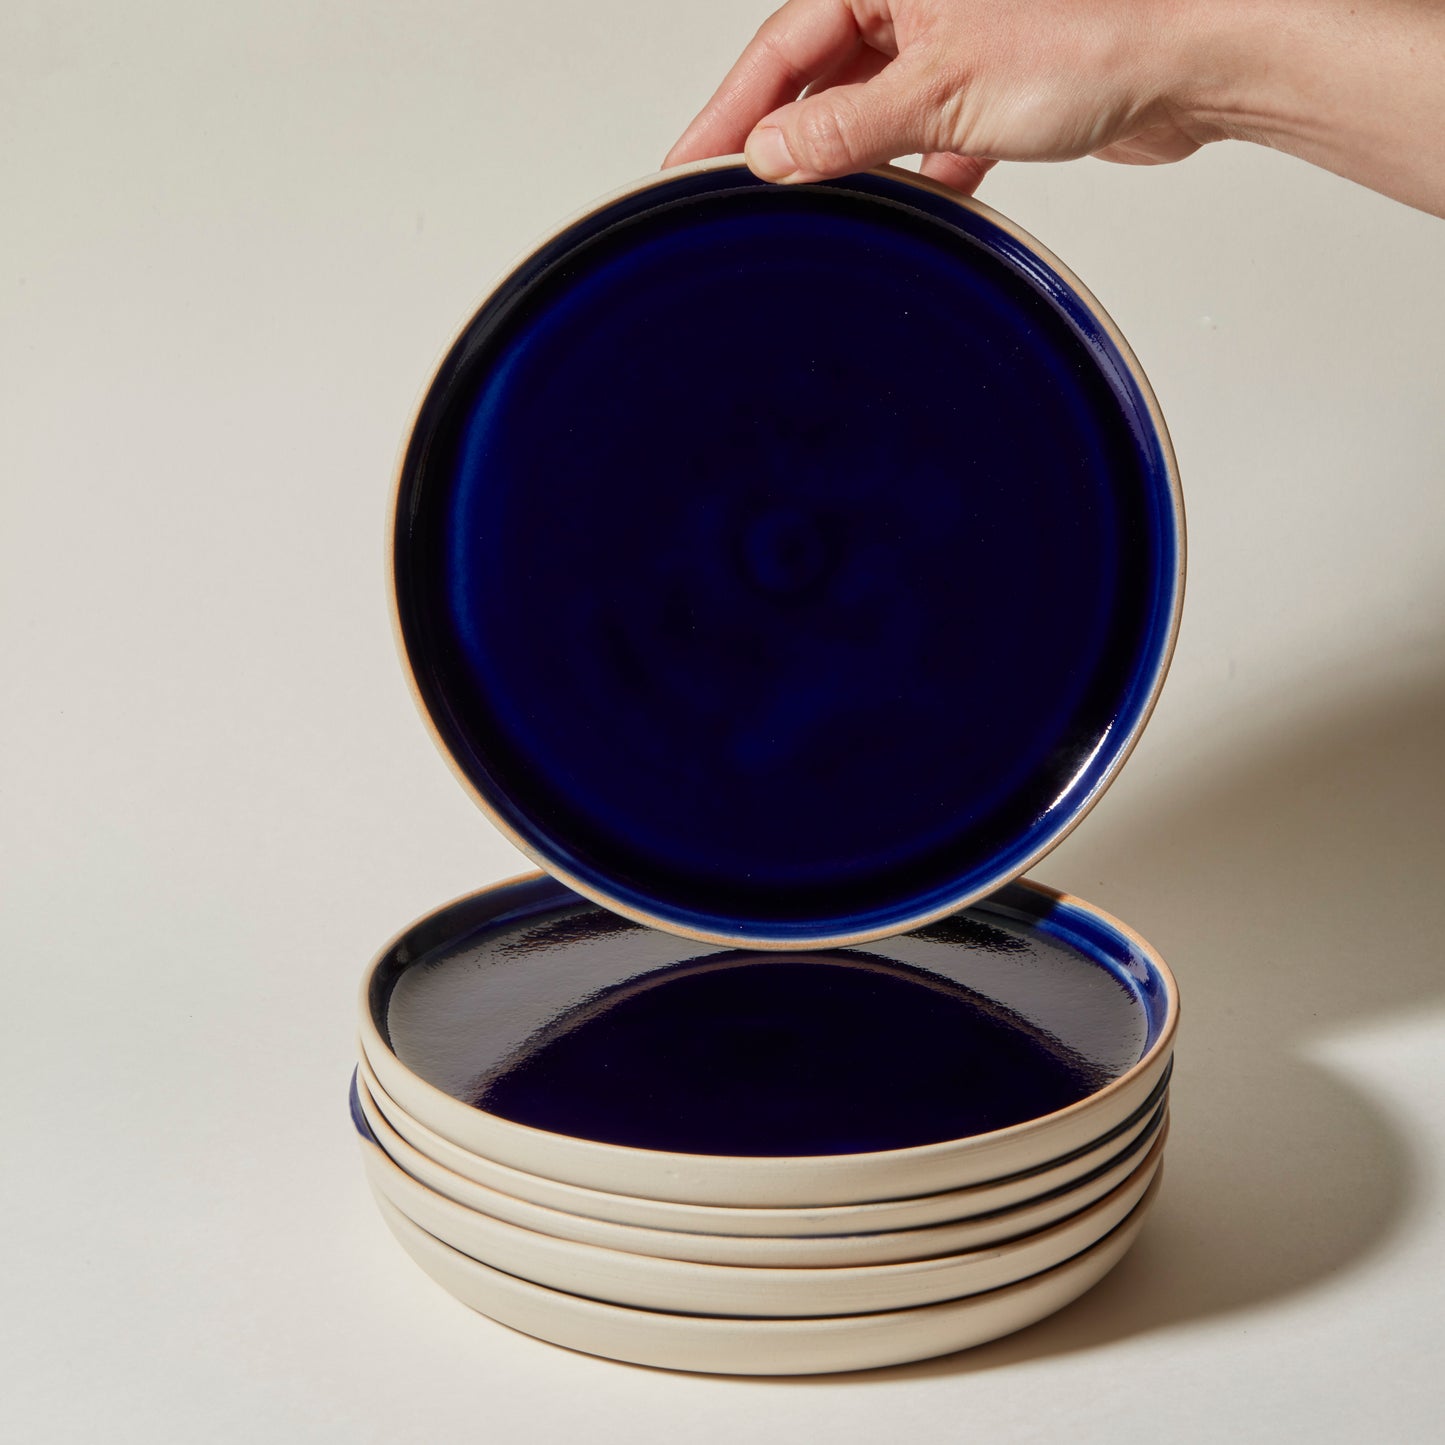 Large blue ceramic plate